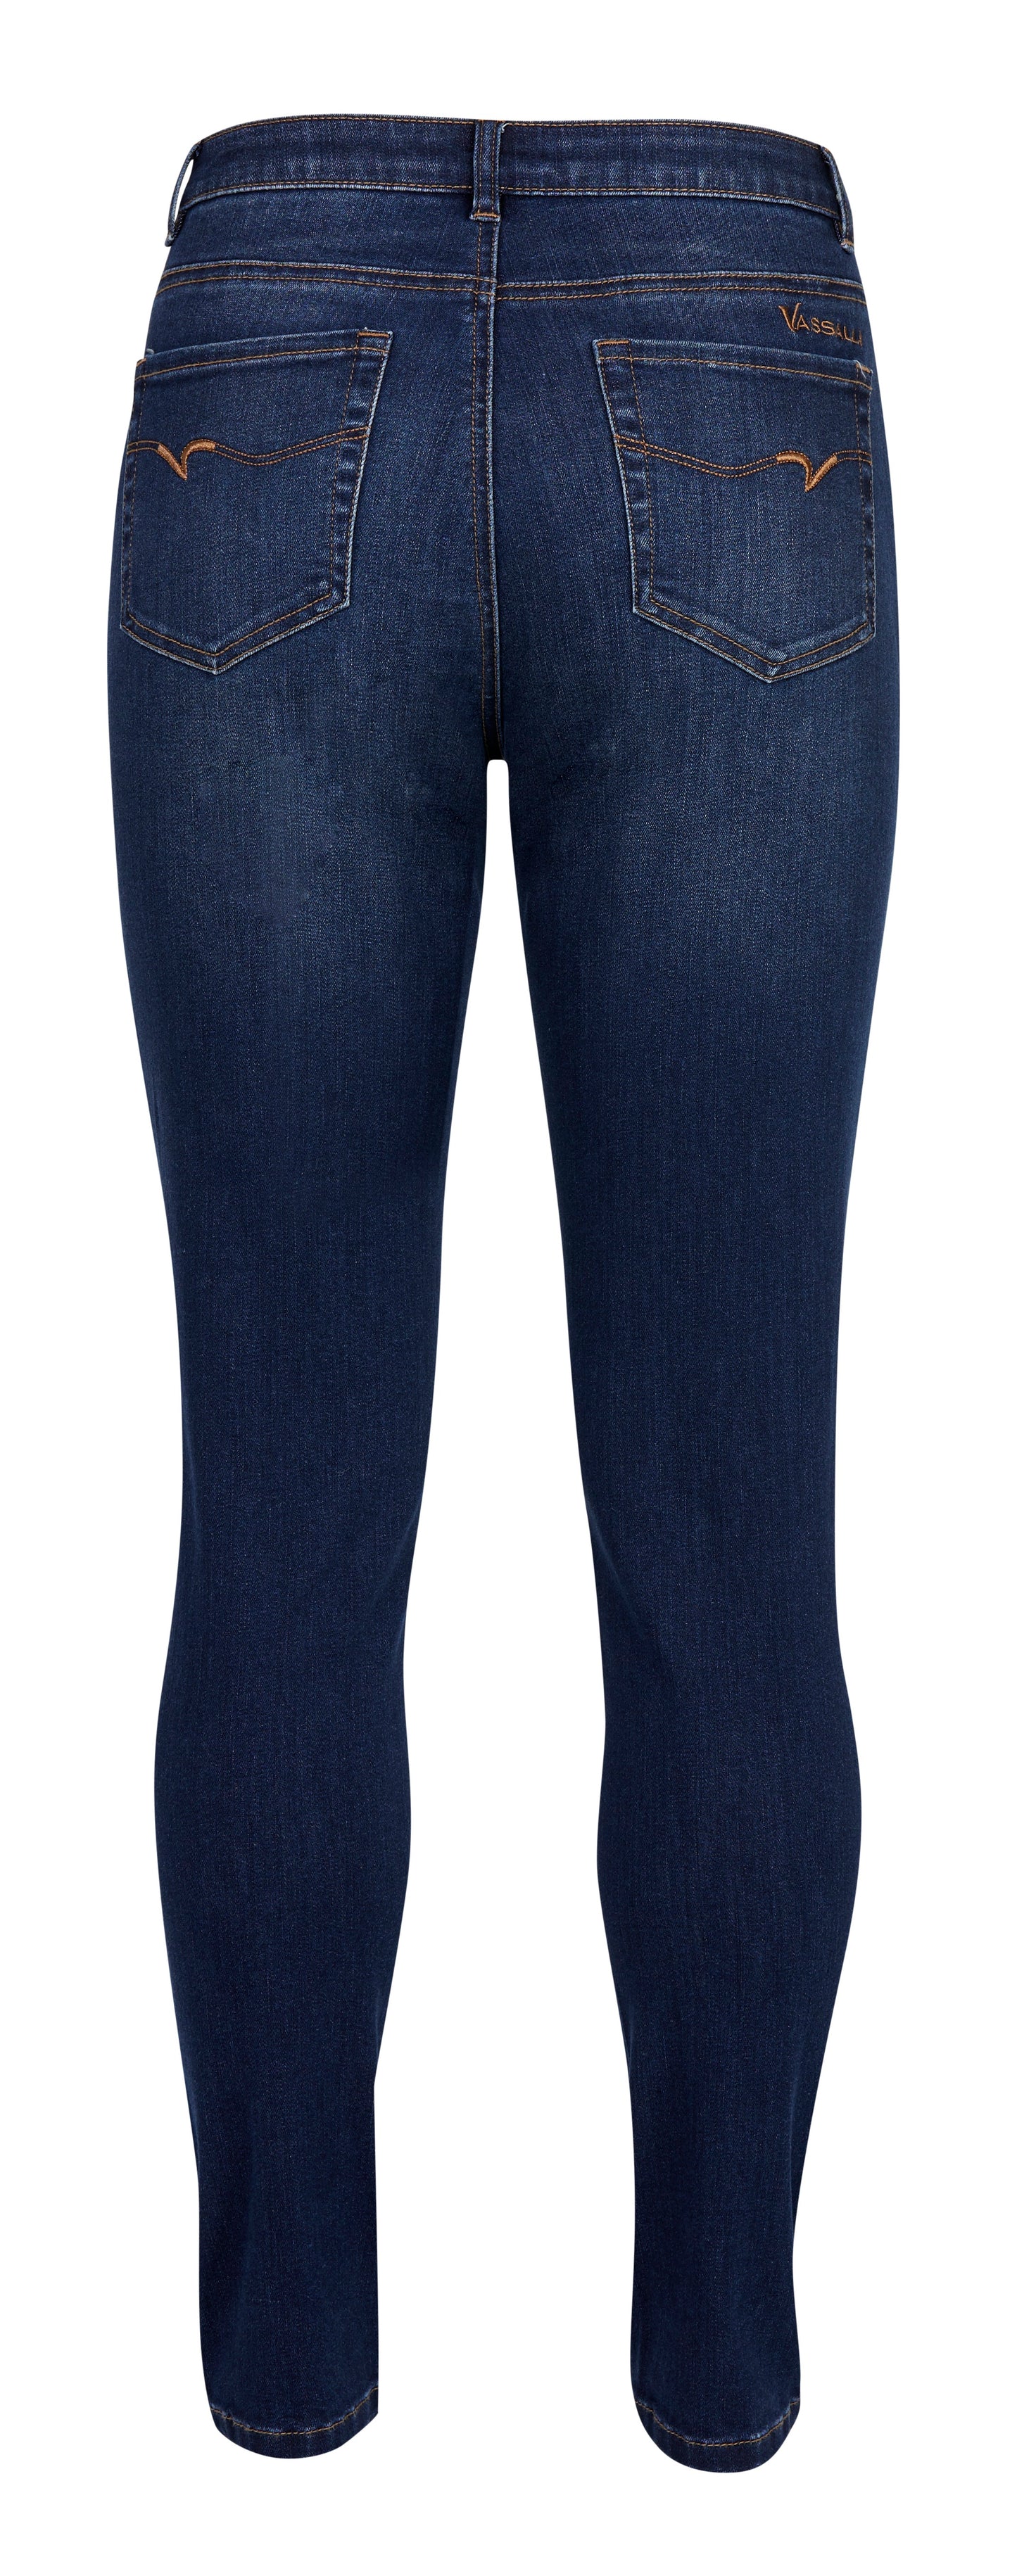 Vassalli - Style 5897 - Skinny Full Length Jean - Indigo